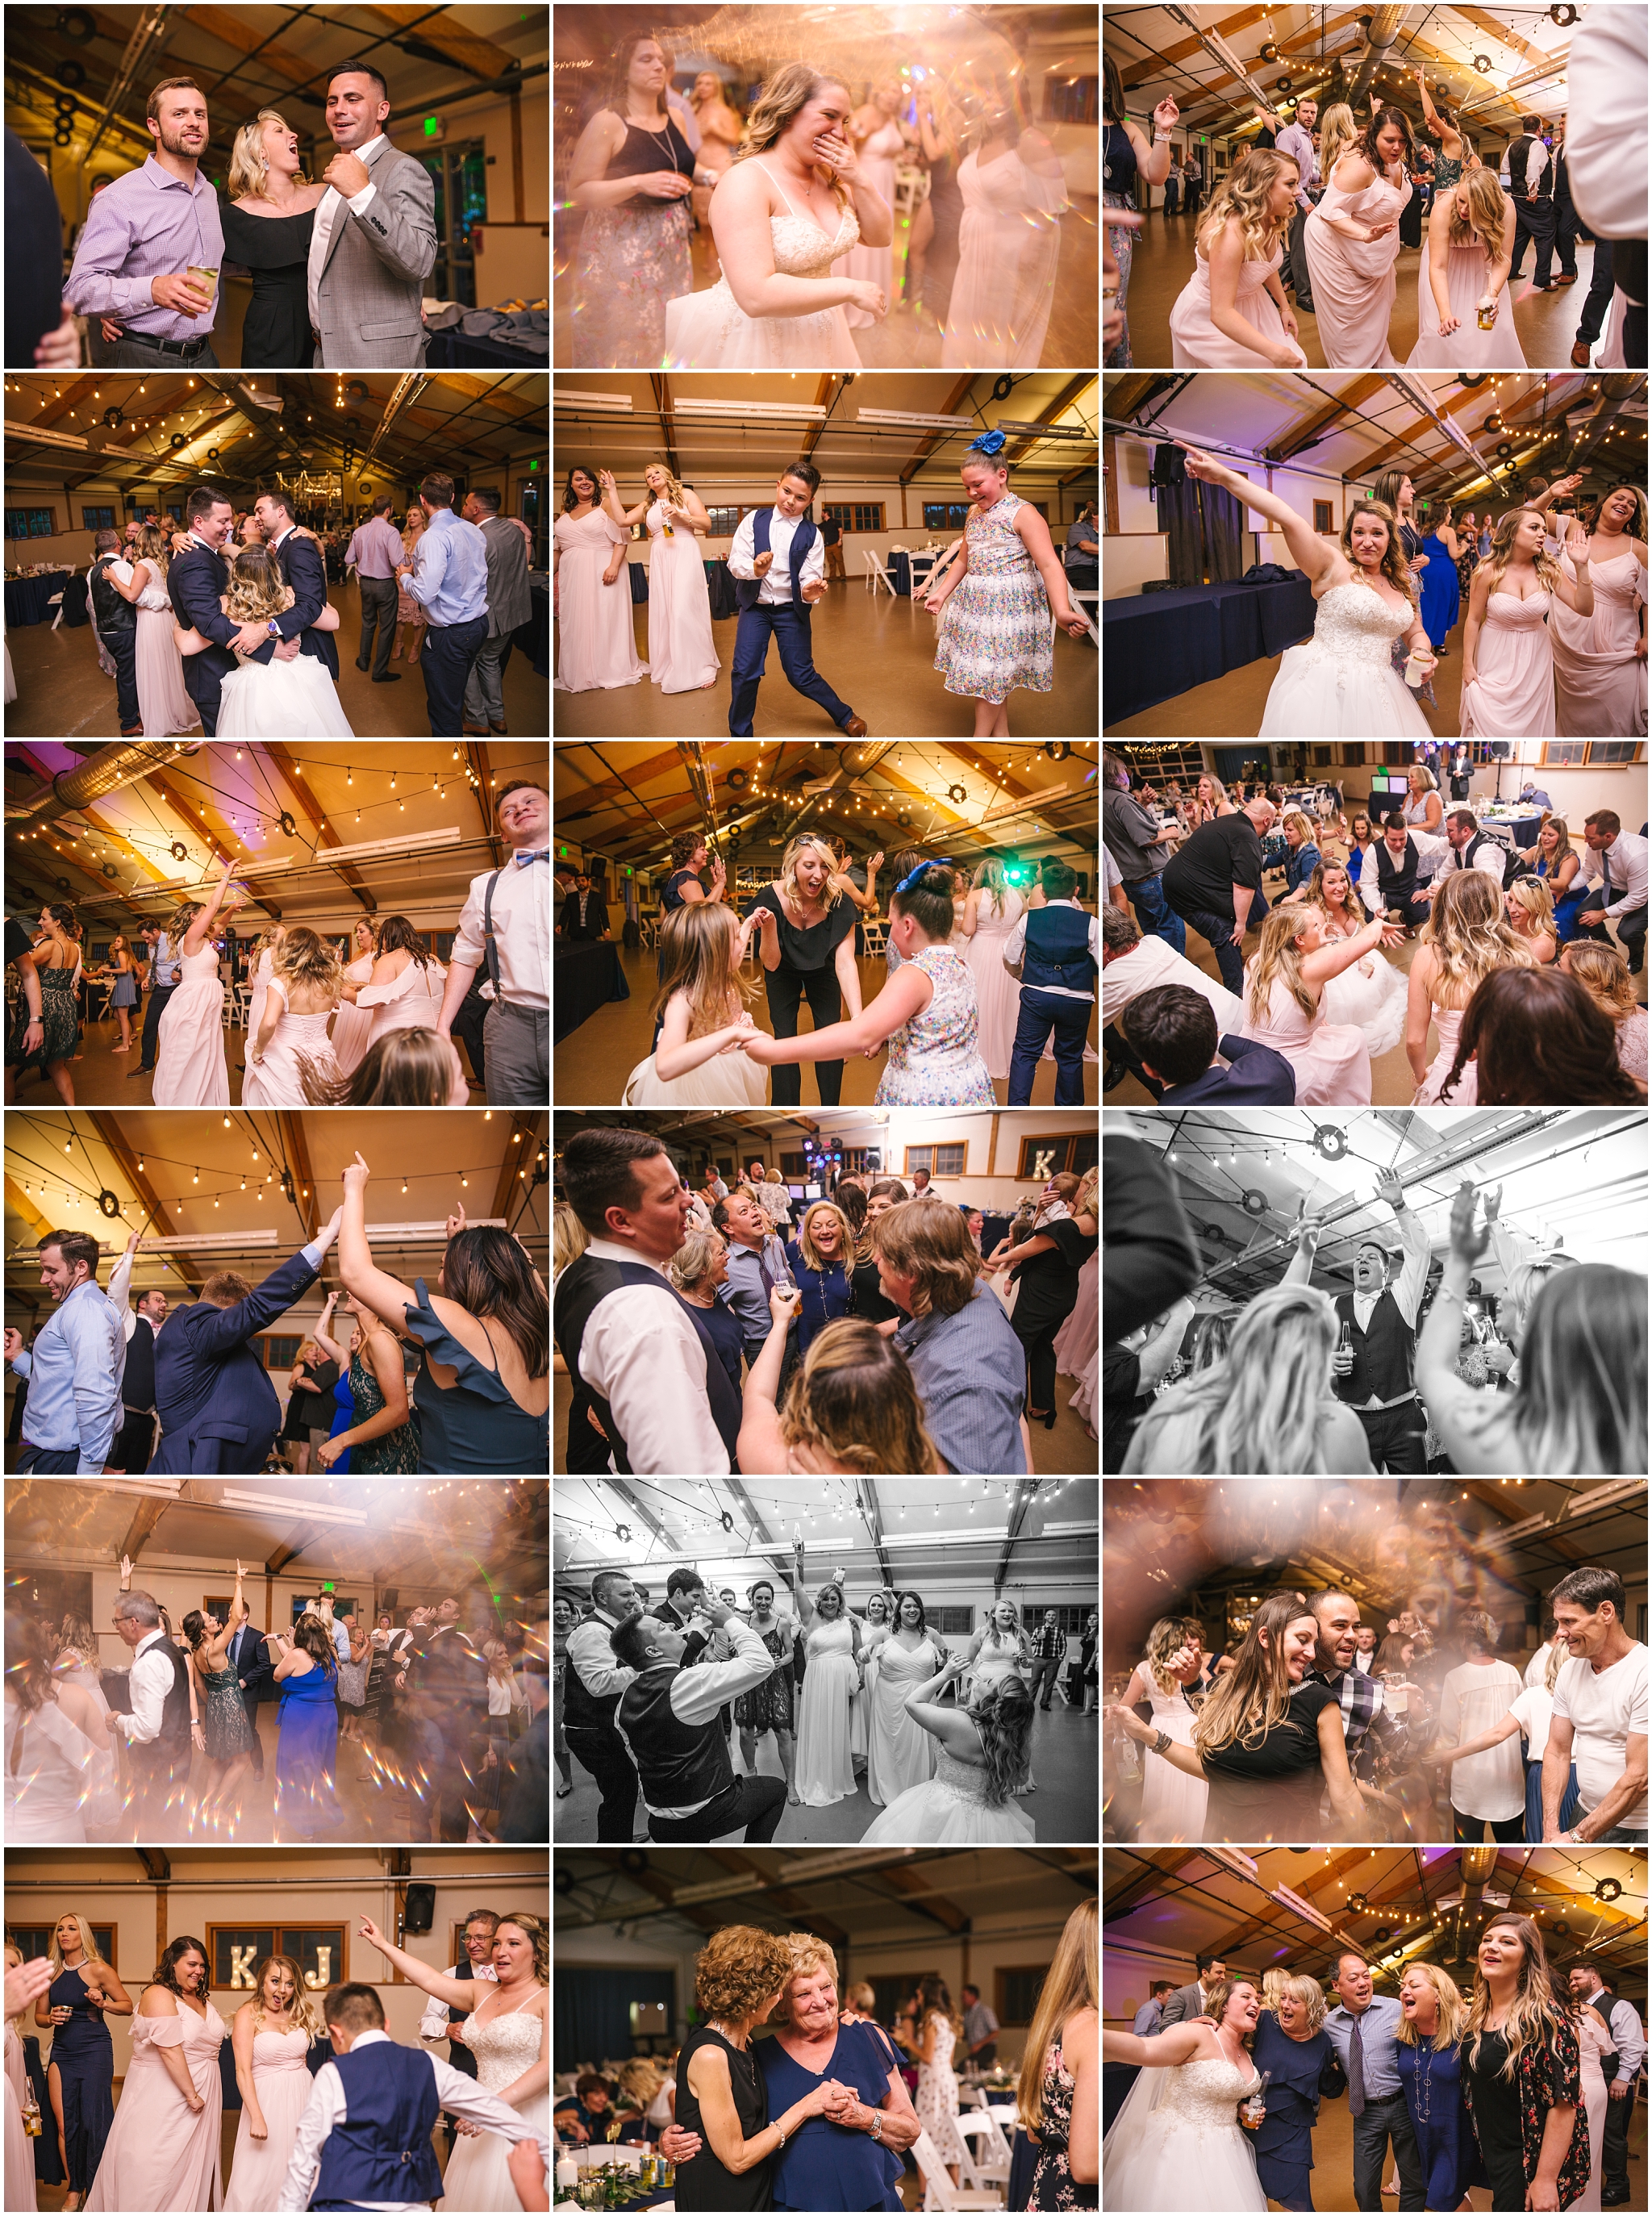 Guests dancing at Pickering Barn wedding reception in Issaquah Washington